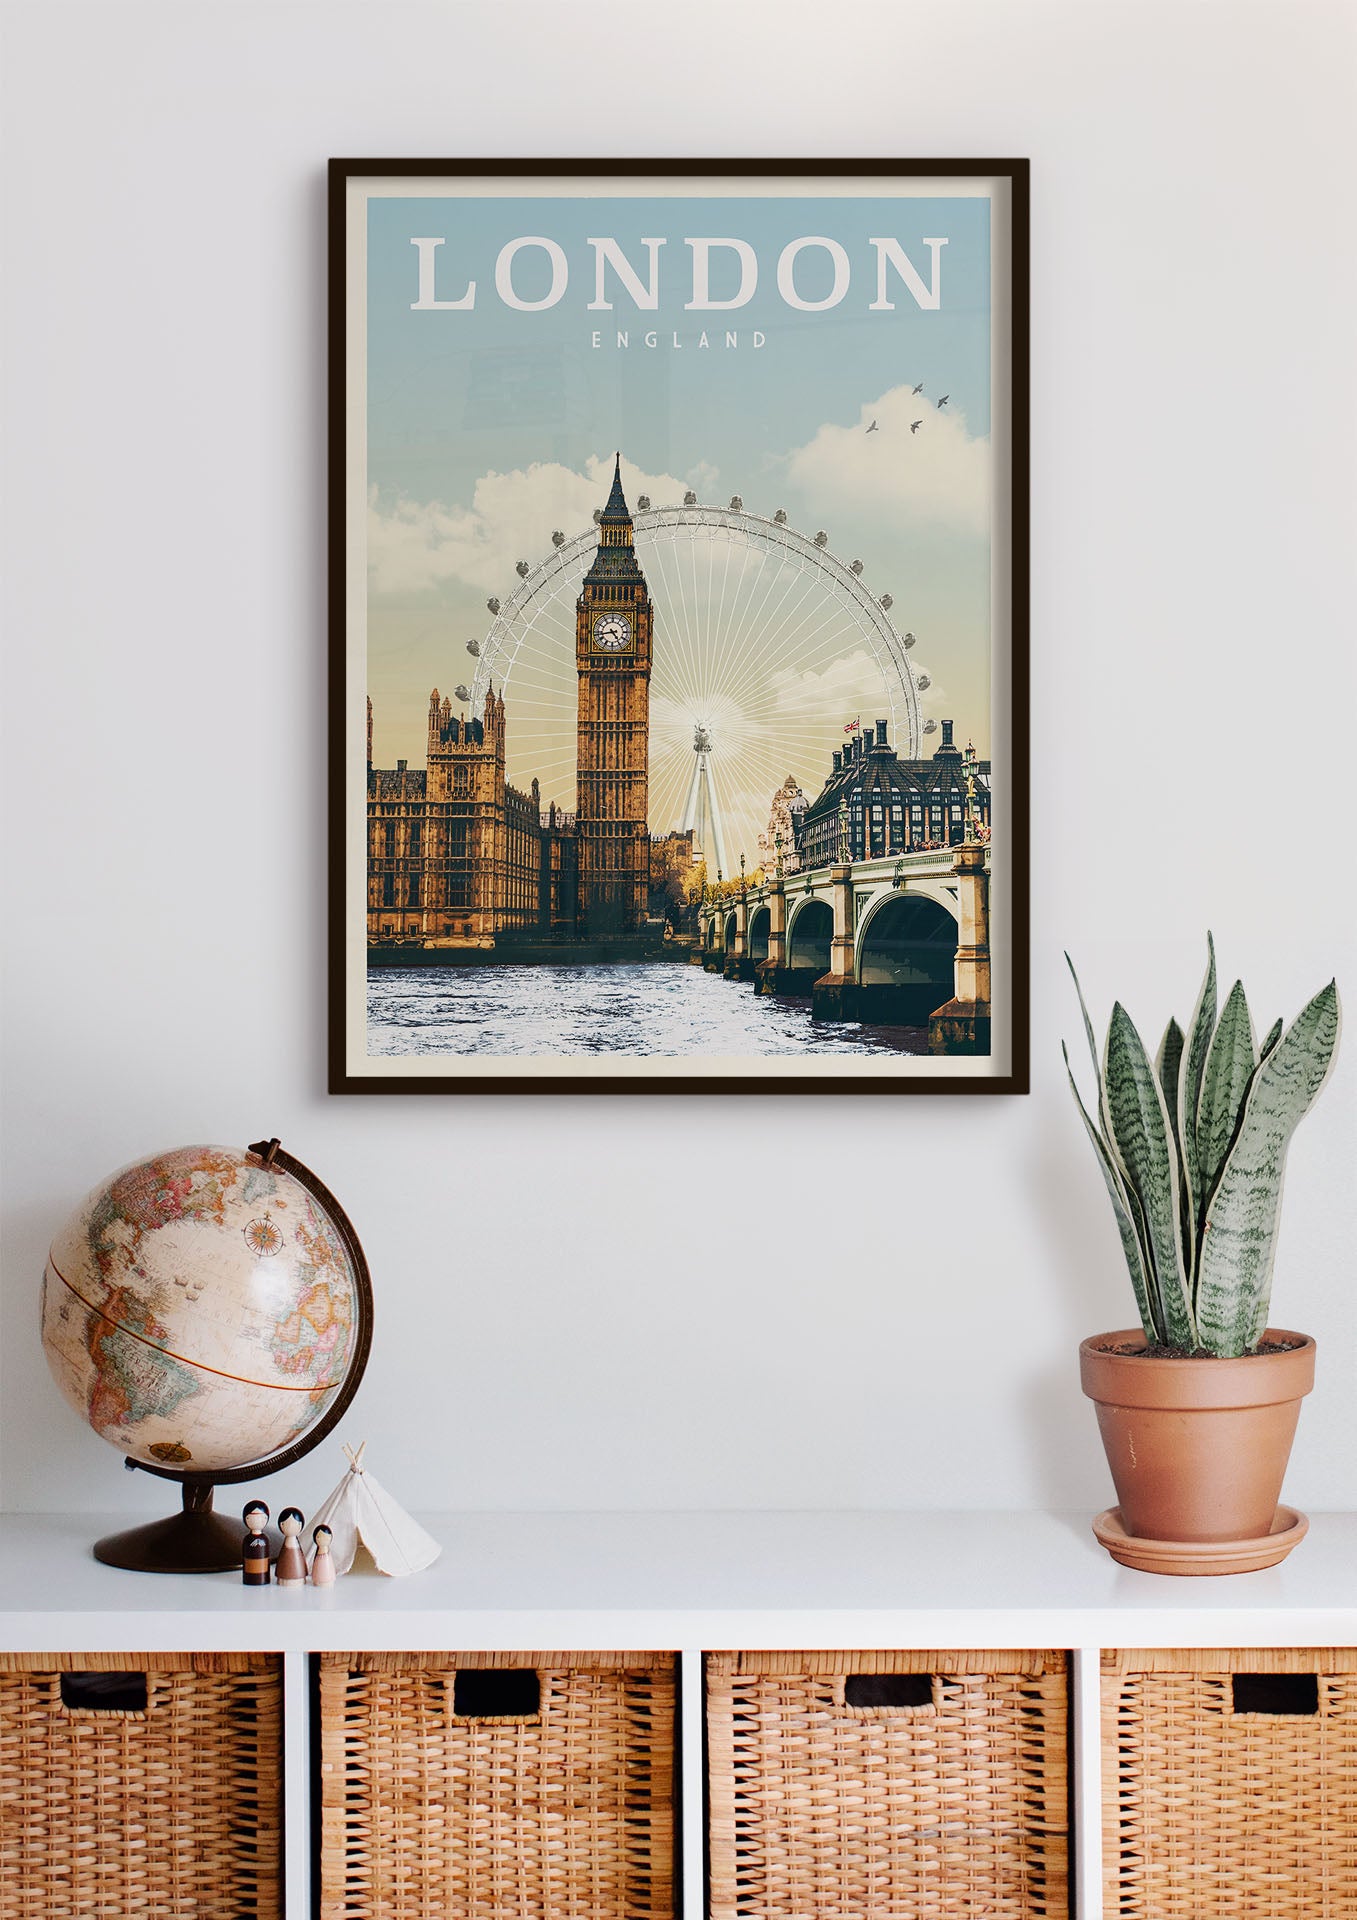 London, England - Vintage Travel Print - Vintaprints